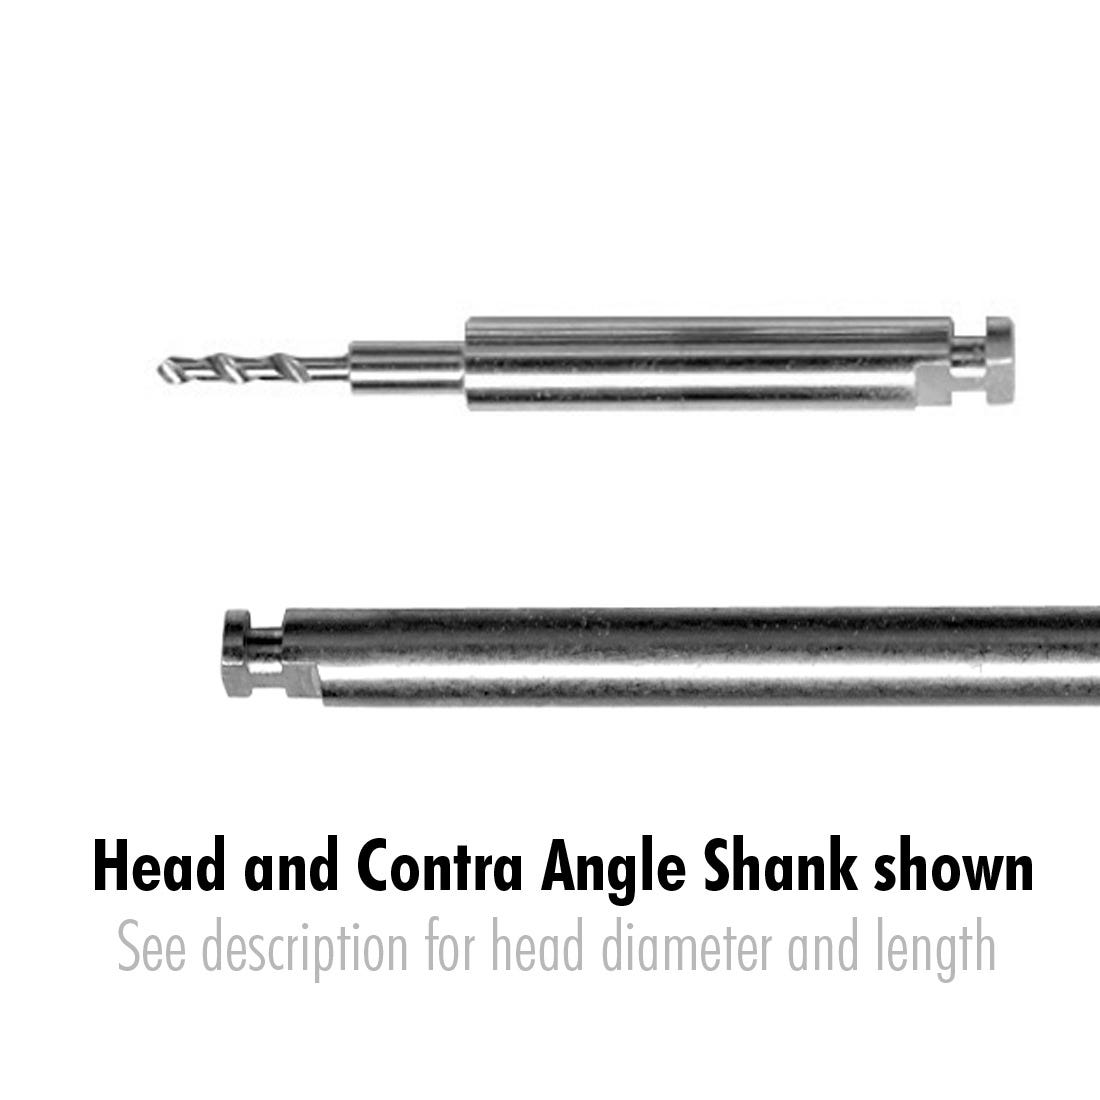 Orthodontic Pilot Twist Drill 1.1mm  23.6mm long. 1.1mm head diameter, contra angle